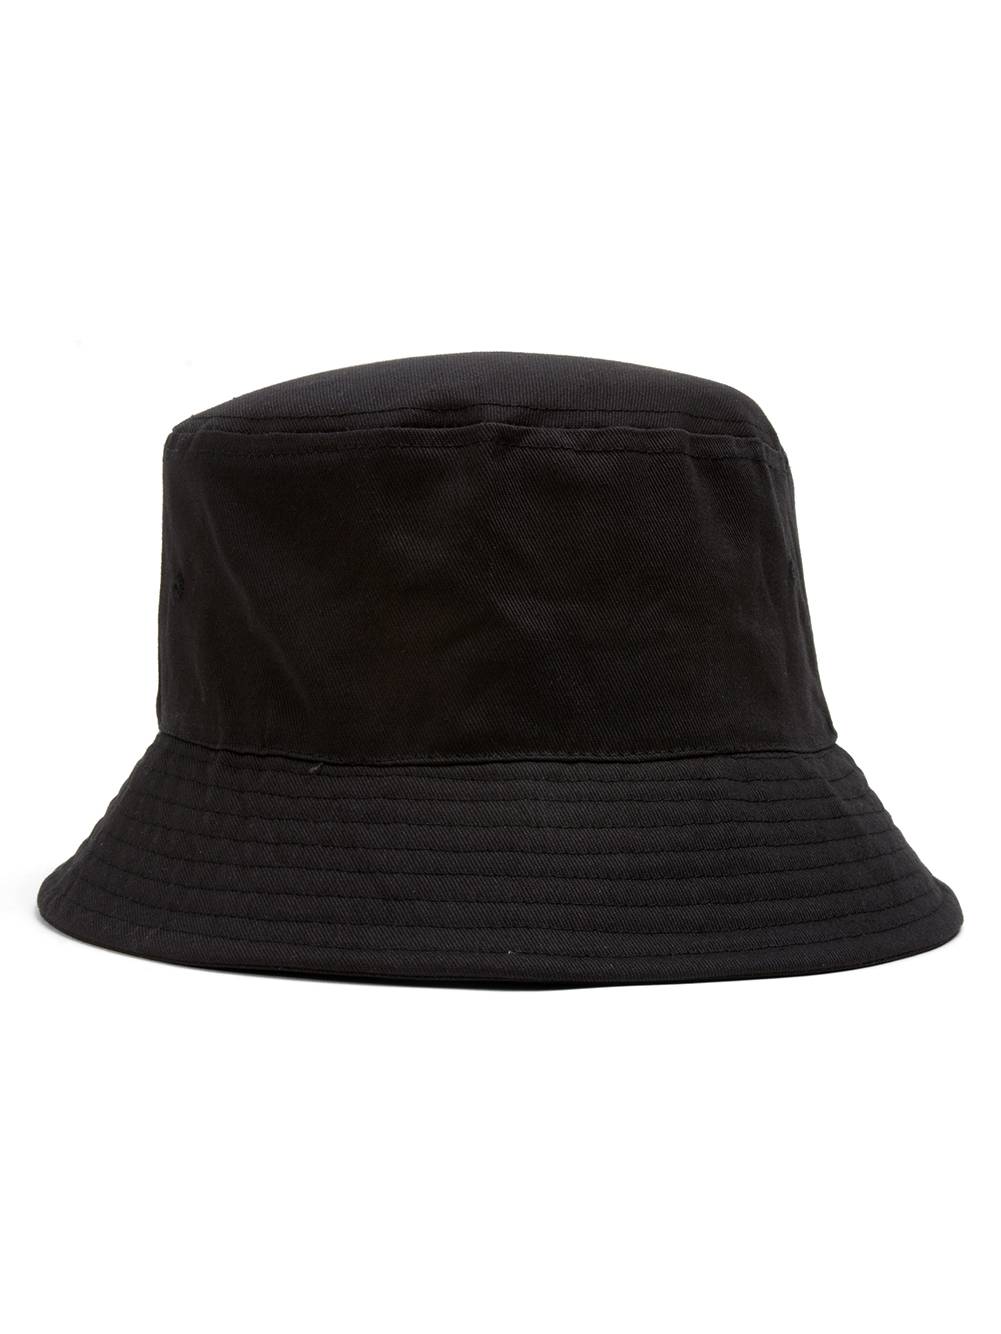 Bucket Hat For Men Women - Cotton Packable Fishing Cap, Black S/M - image 2 of 3